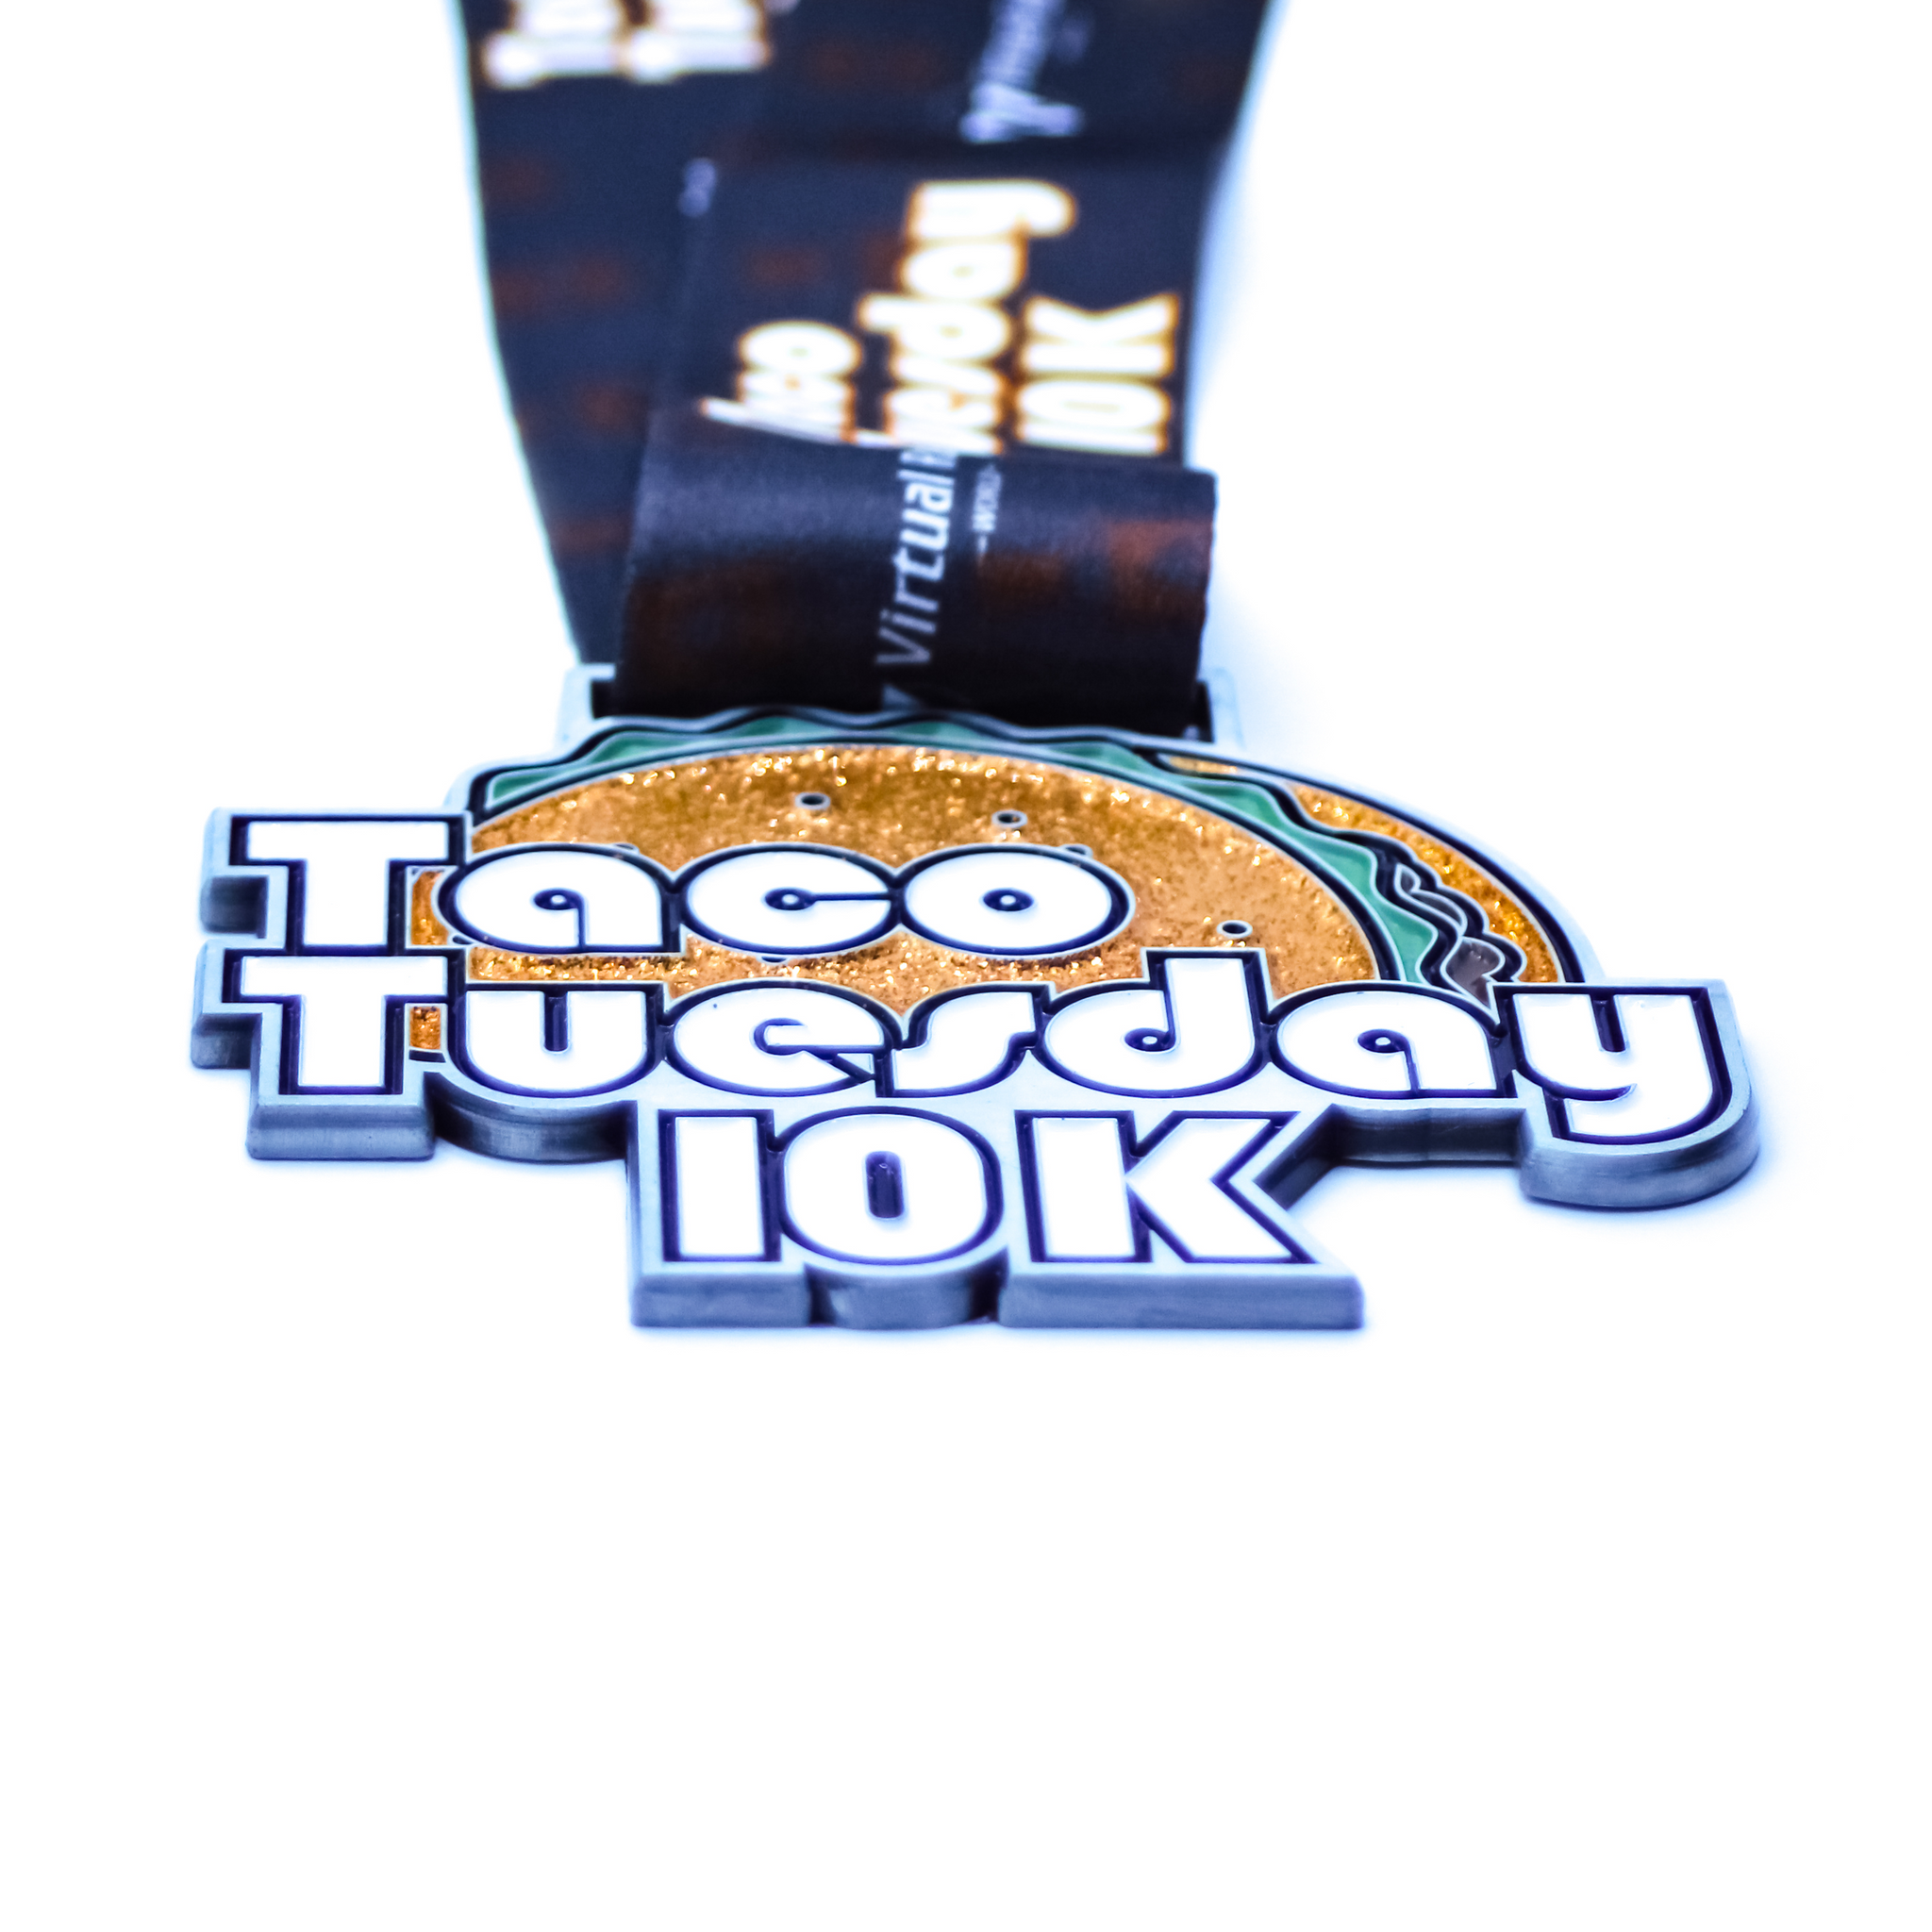 Taco Tuesday 10k - Entry + Medal